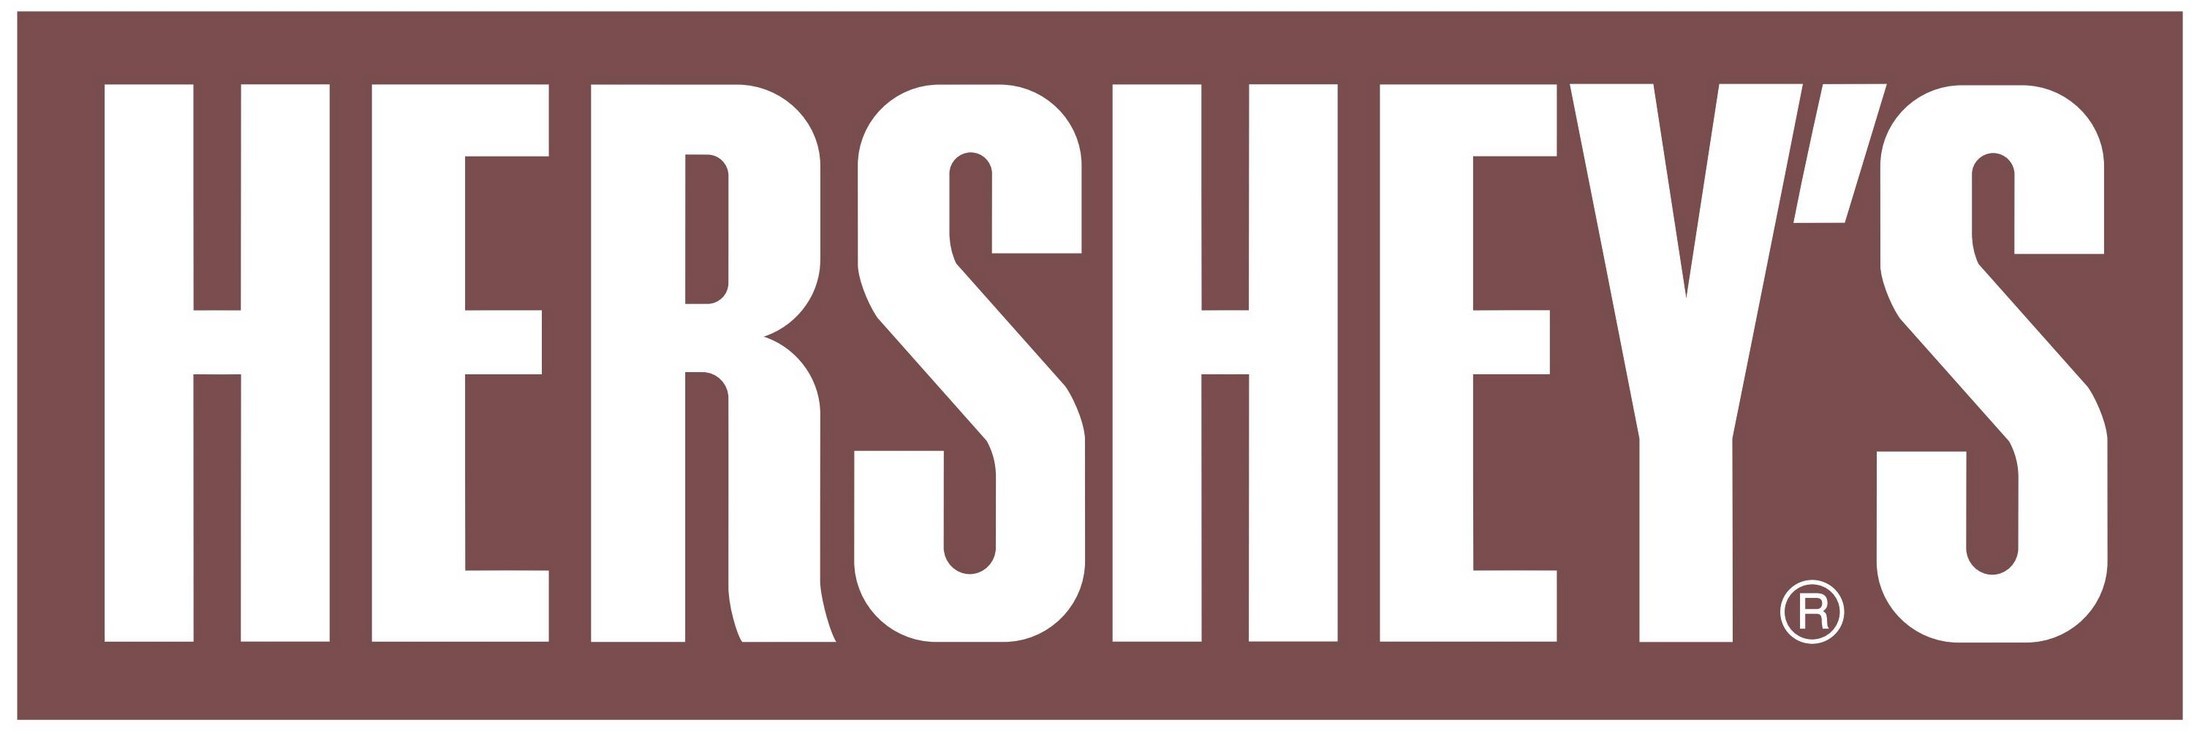 Hershey's Logo [EPS File]